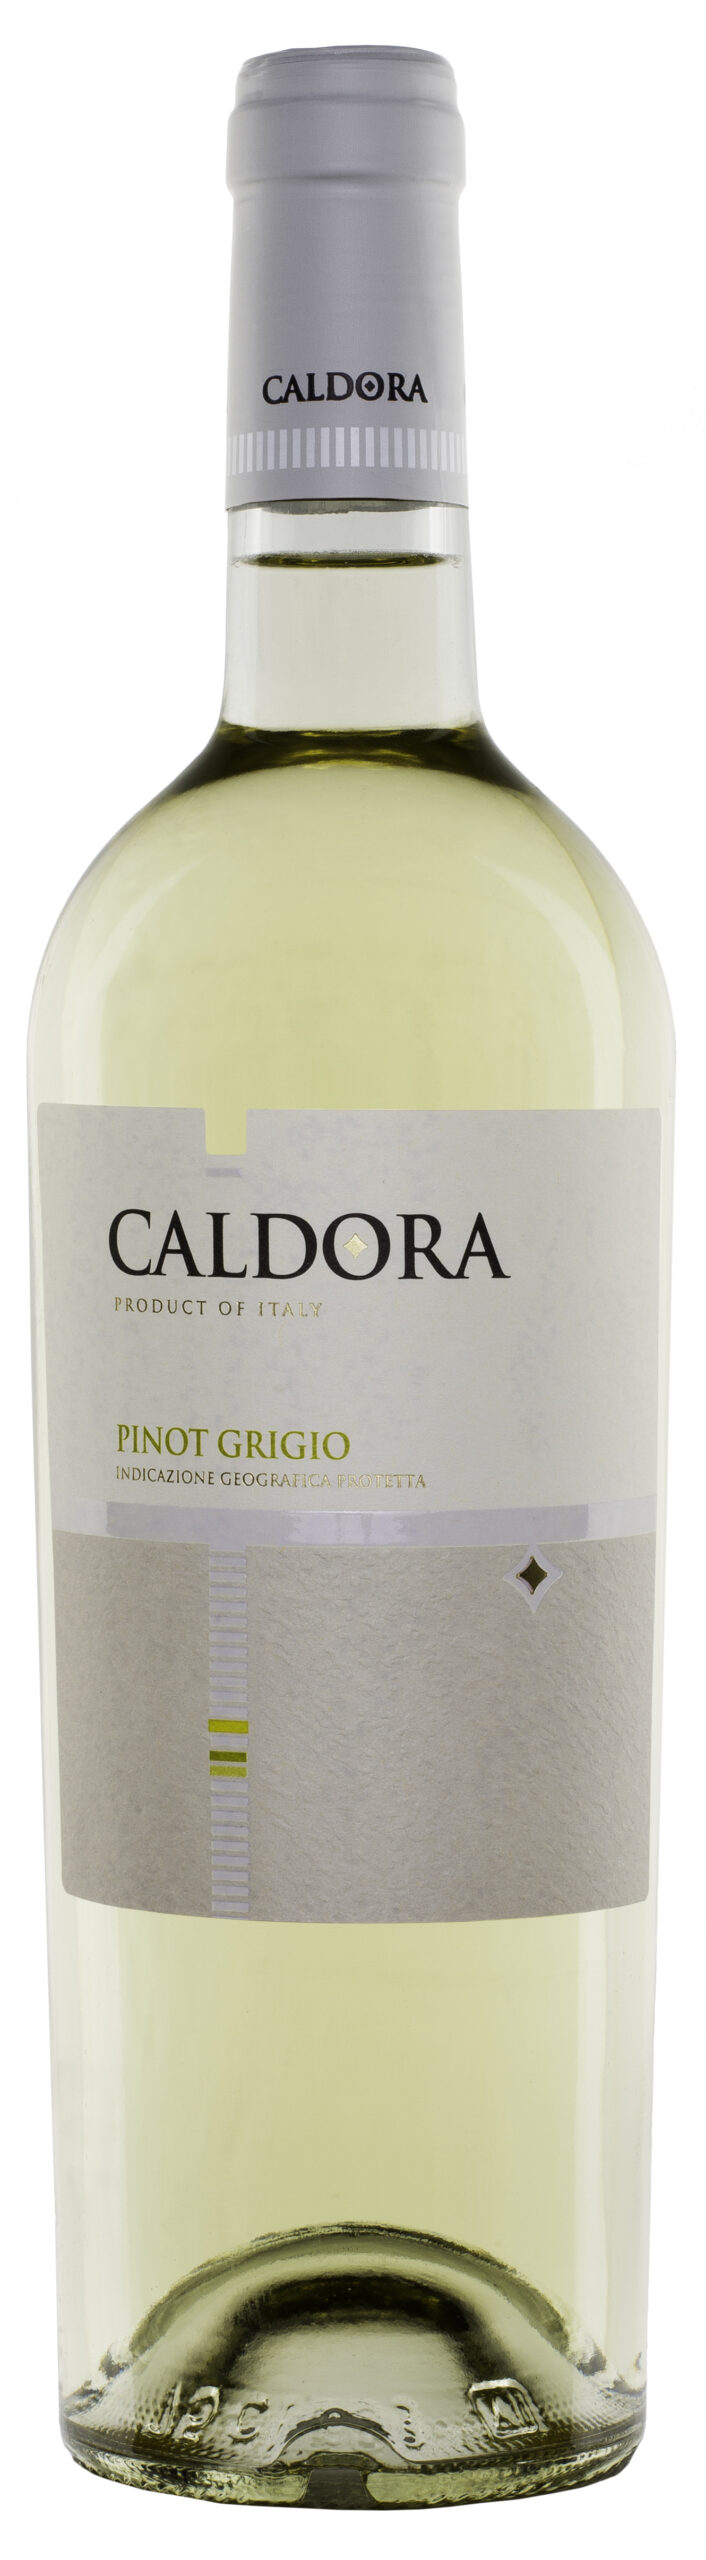 Caldora Pinot Grigio